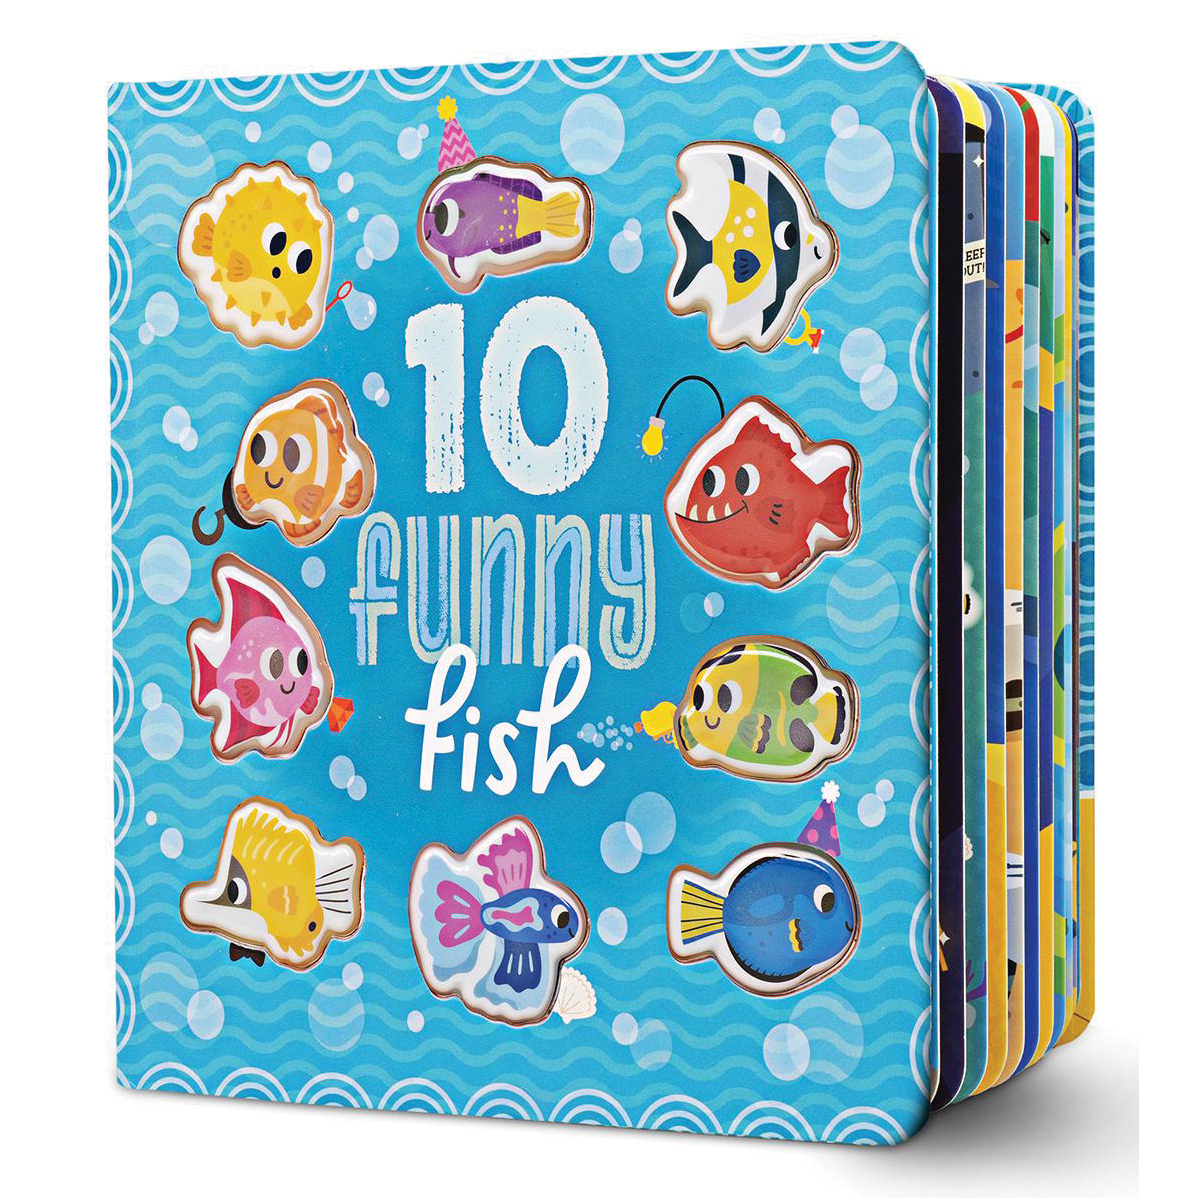  10 Funny Fish 